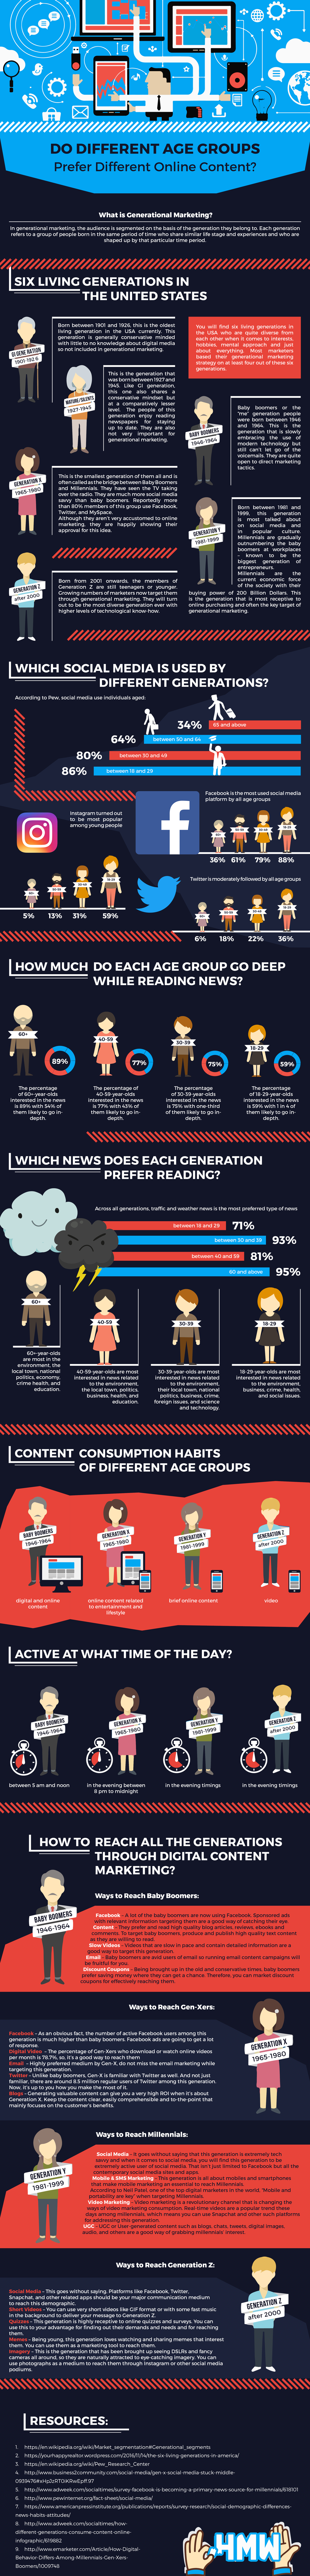 Generational Marketing Infographic